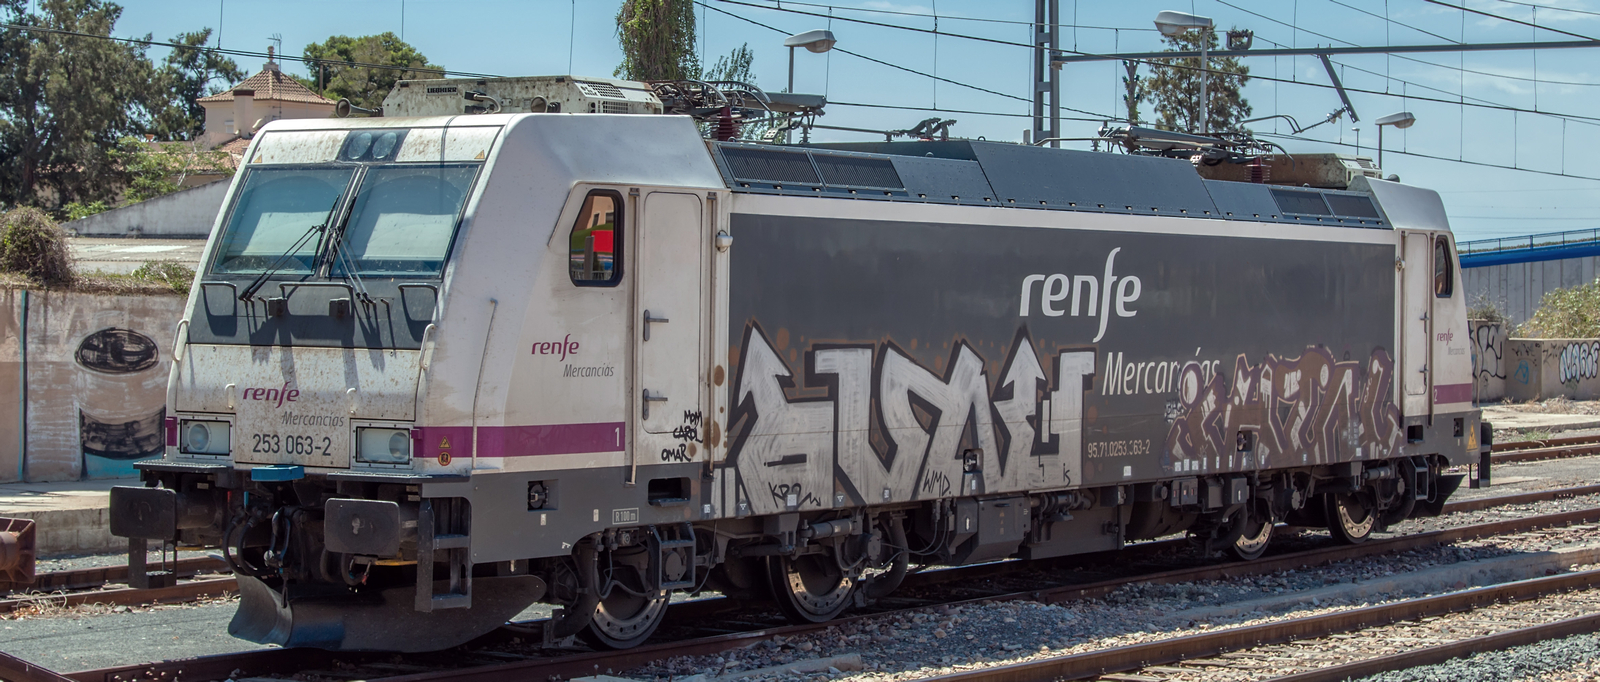 Broad gauge 253 063 of the Spanish RENFE in July 2014 in Sagunto